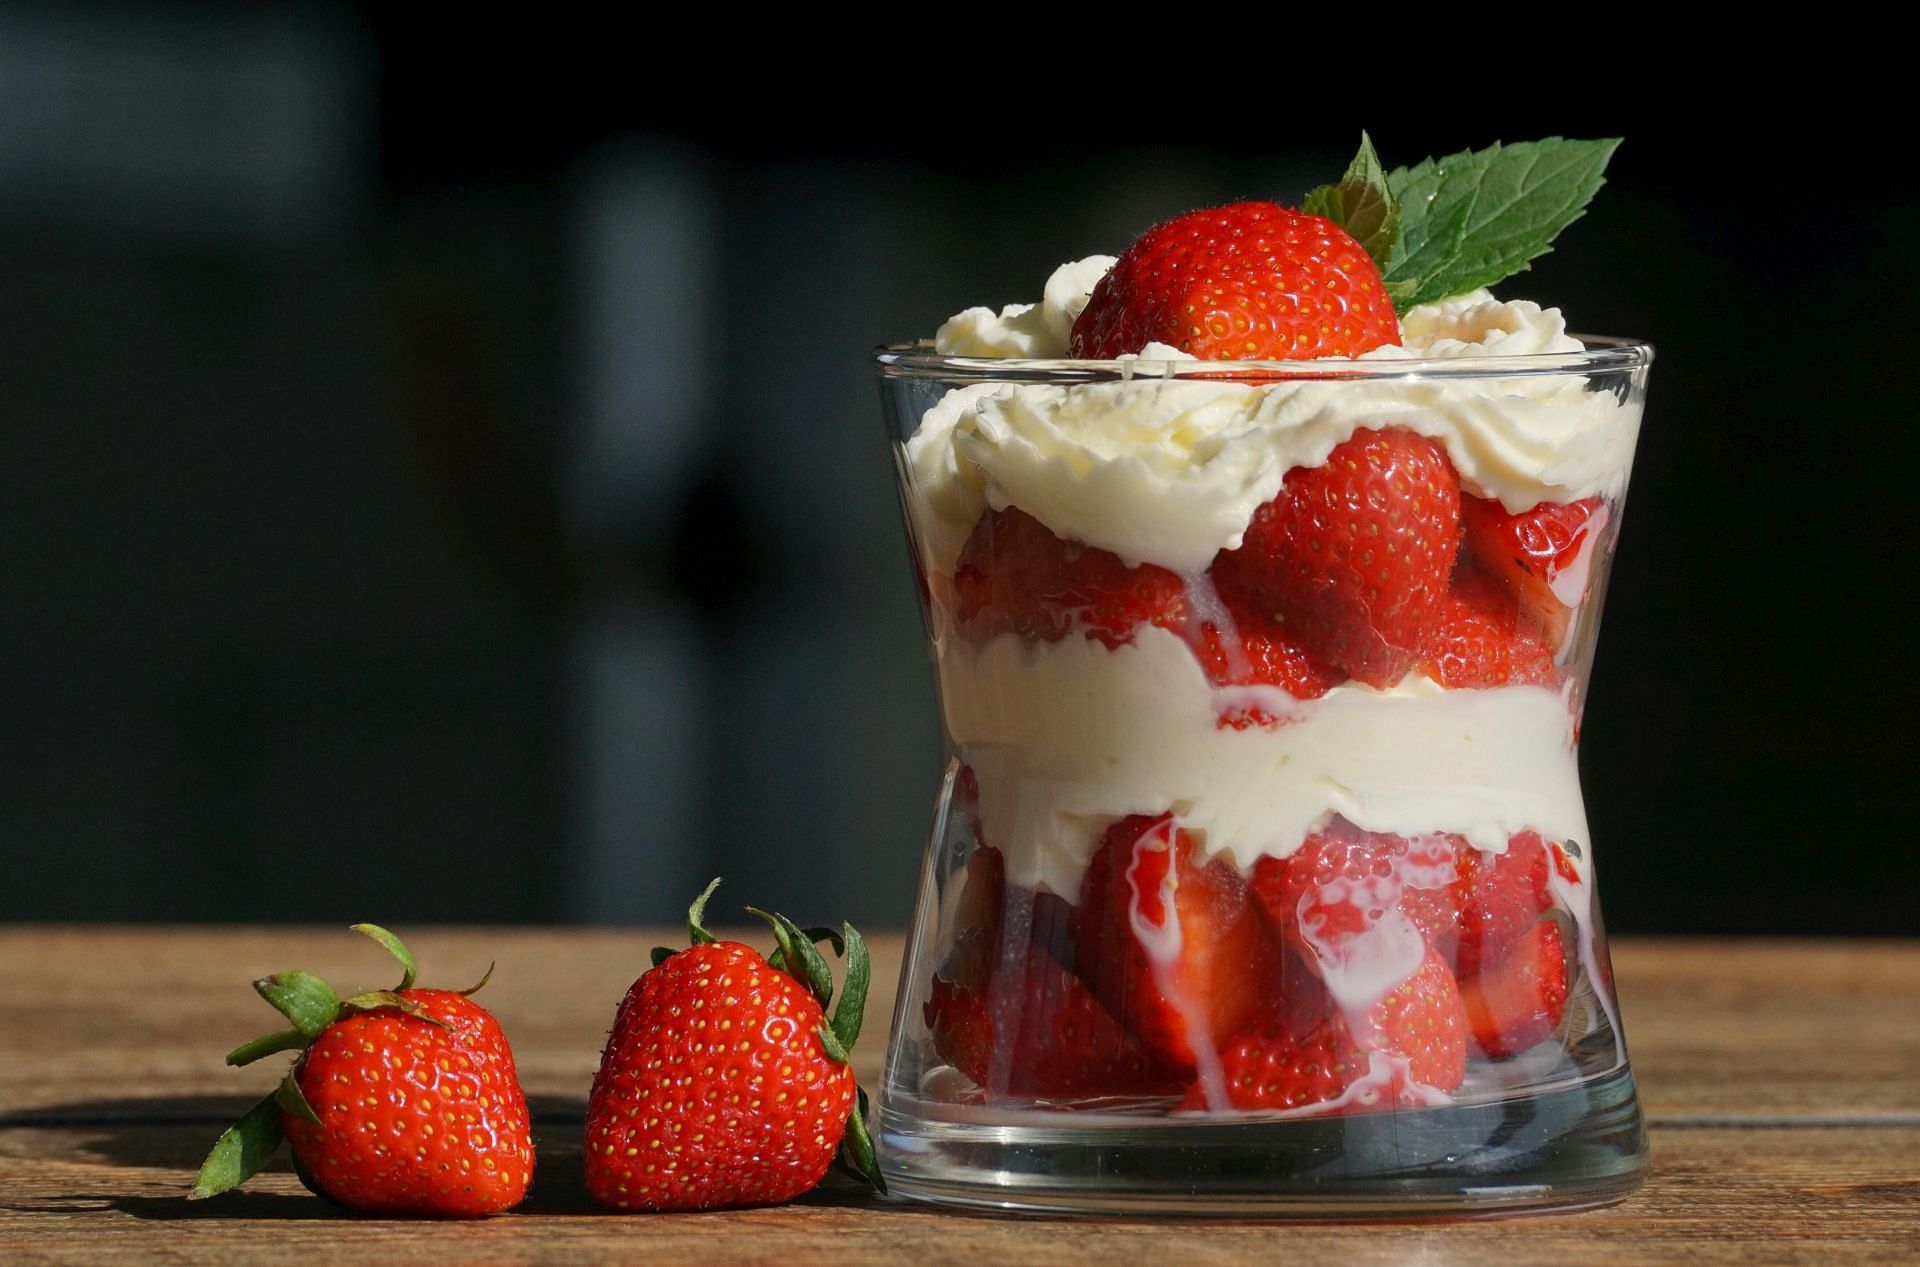 healthy dinner desserts (image sourced via Pexels / Photo by susanne)